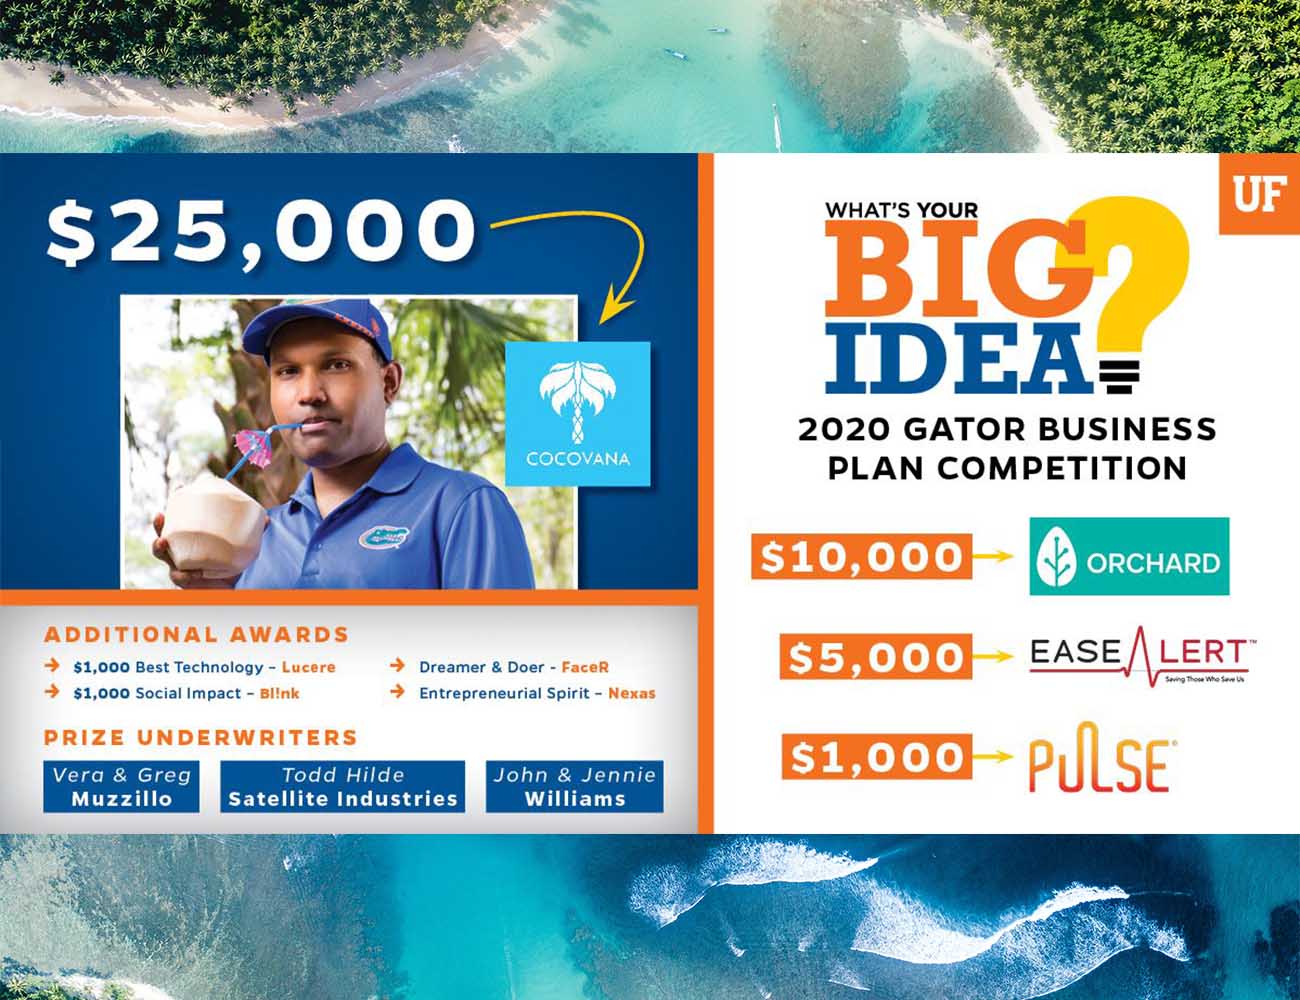 2020 Big Idea Gator Business Plan Competition University of Florida Cocovana Coconut Twist Sheldon Barrett